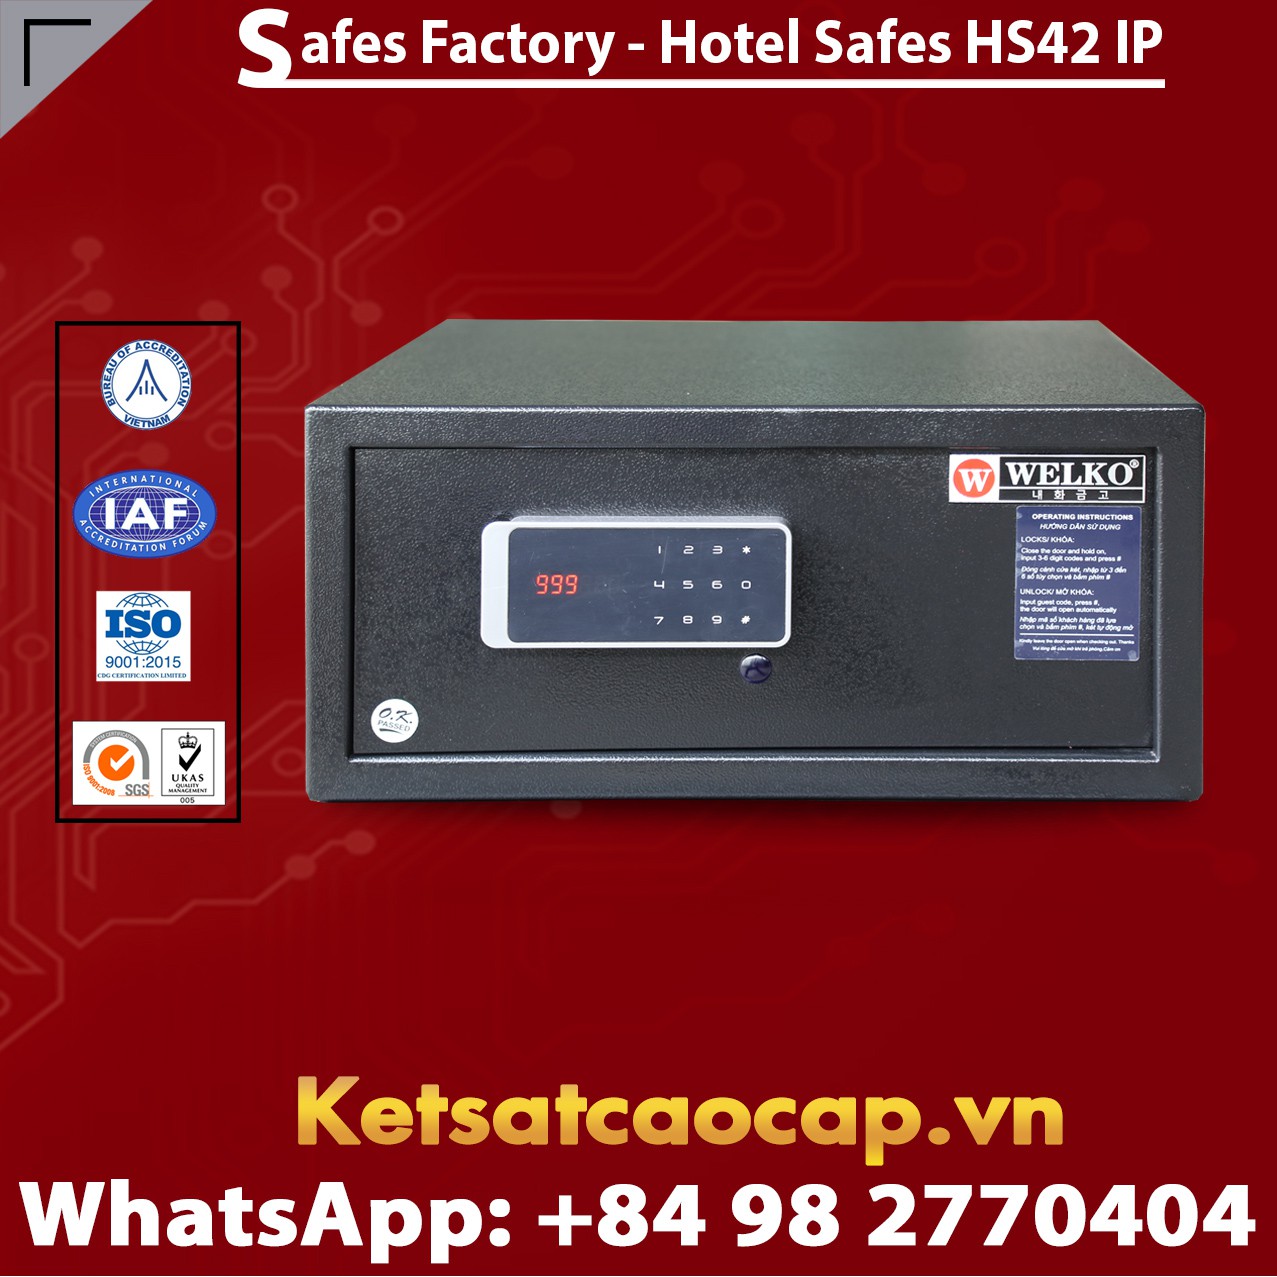 Hotel Safes WELKO HS42 IP